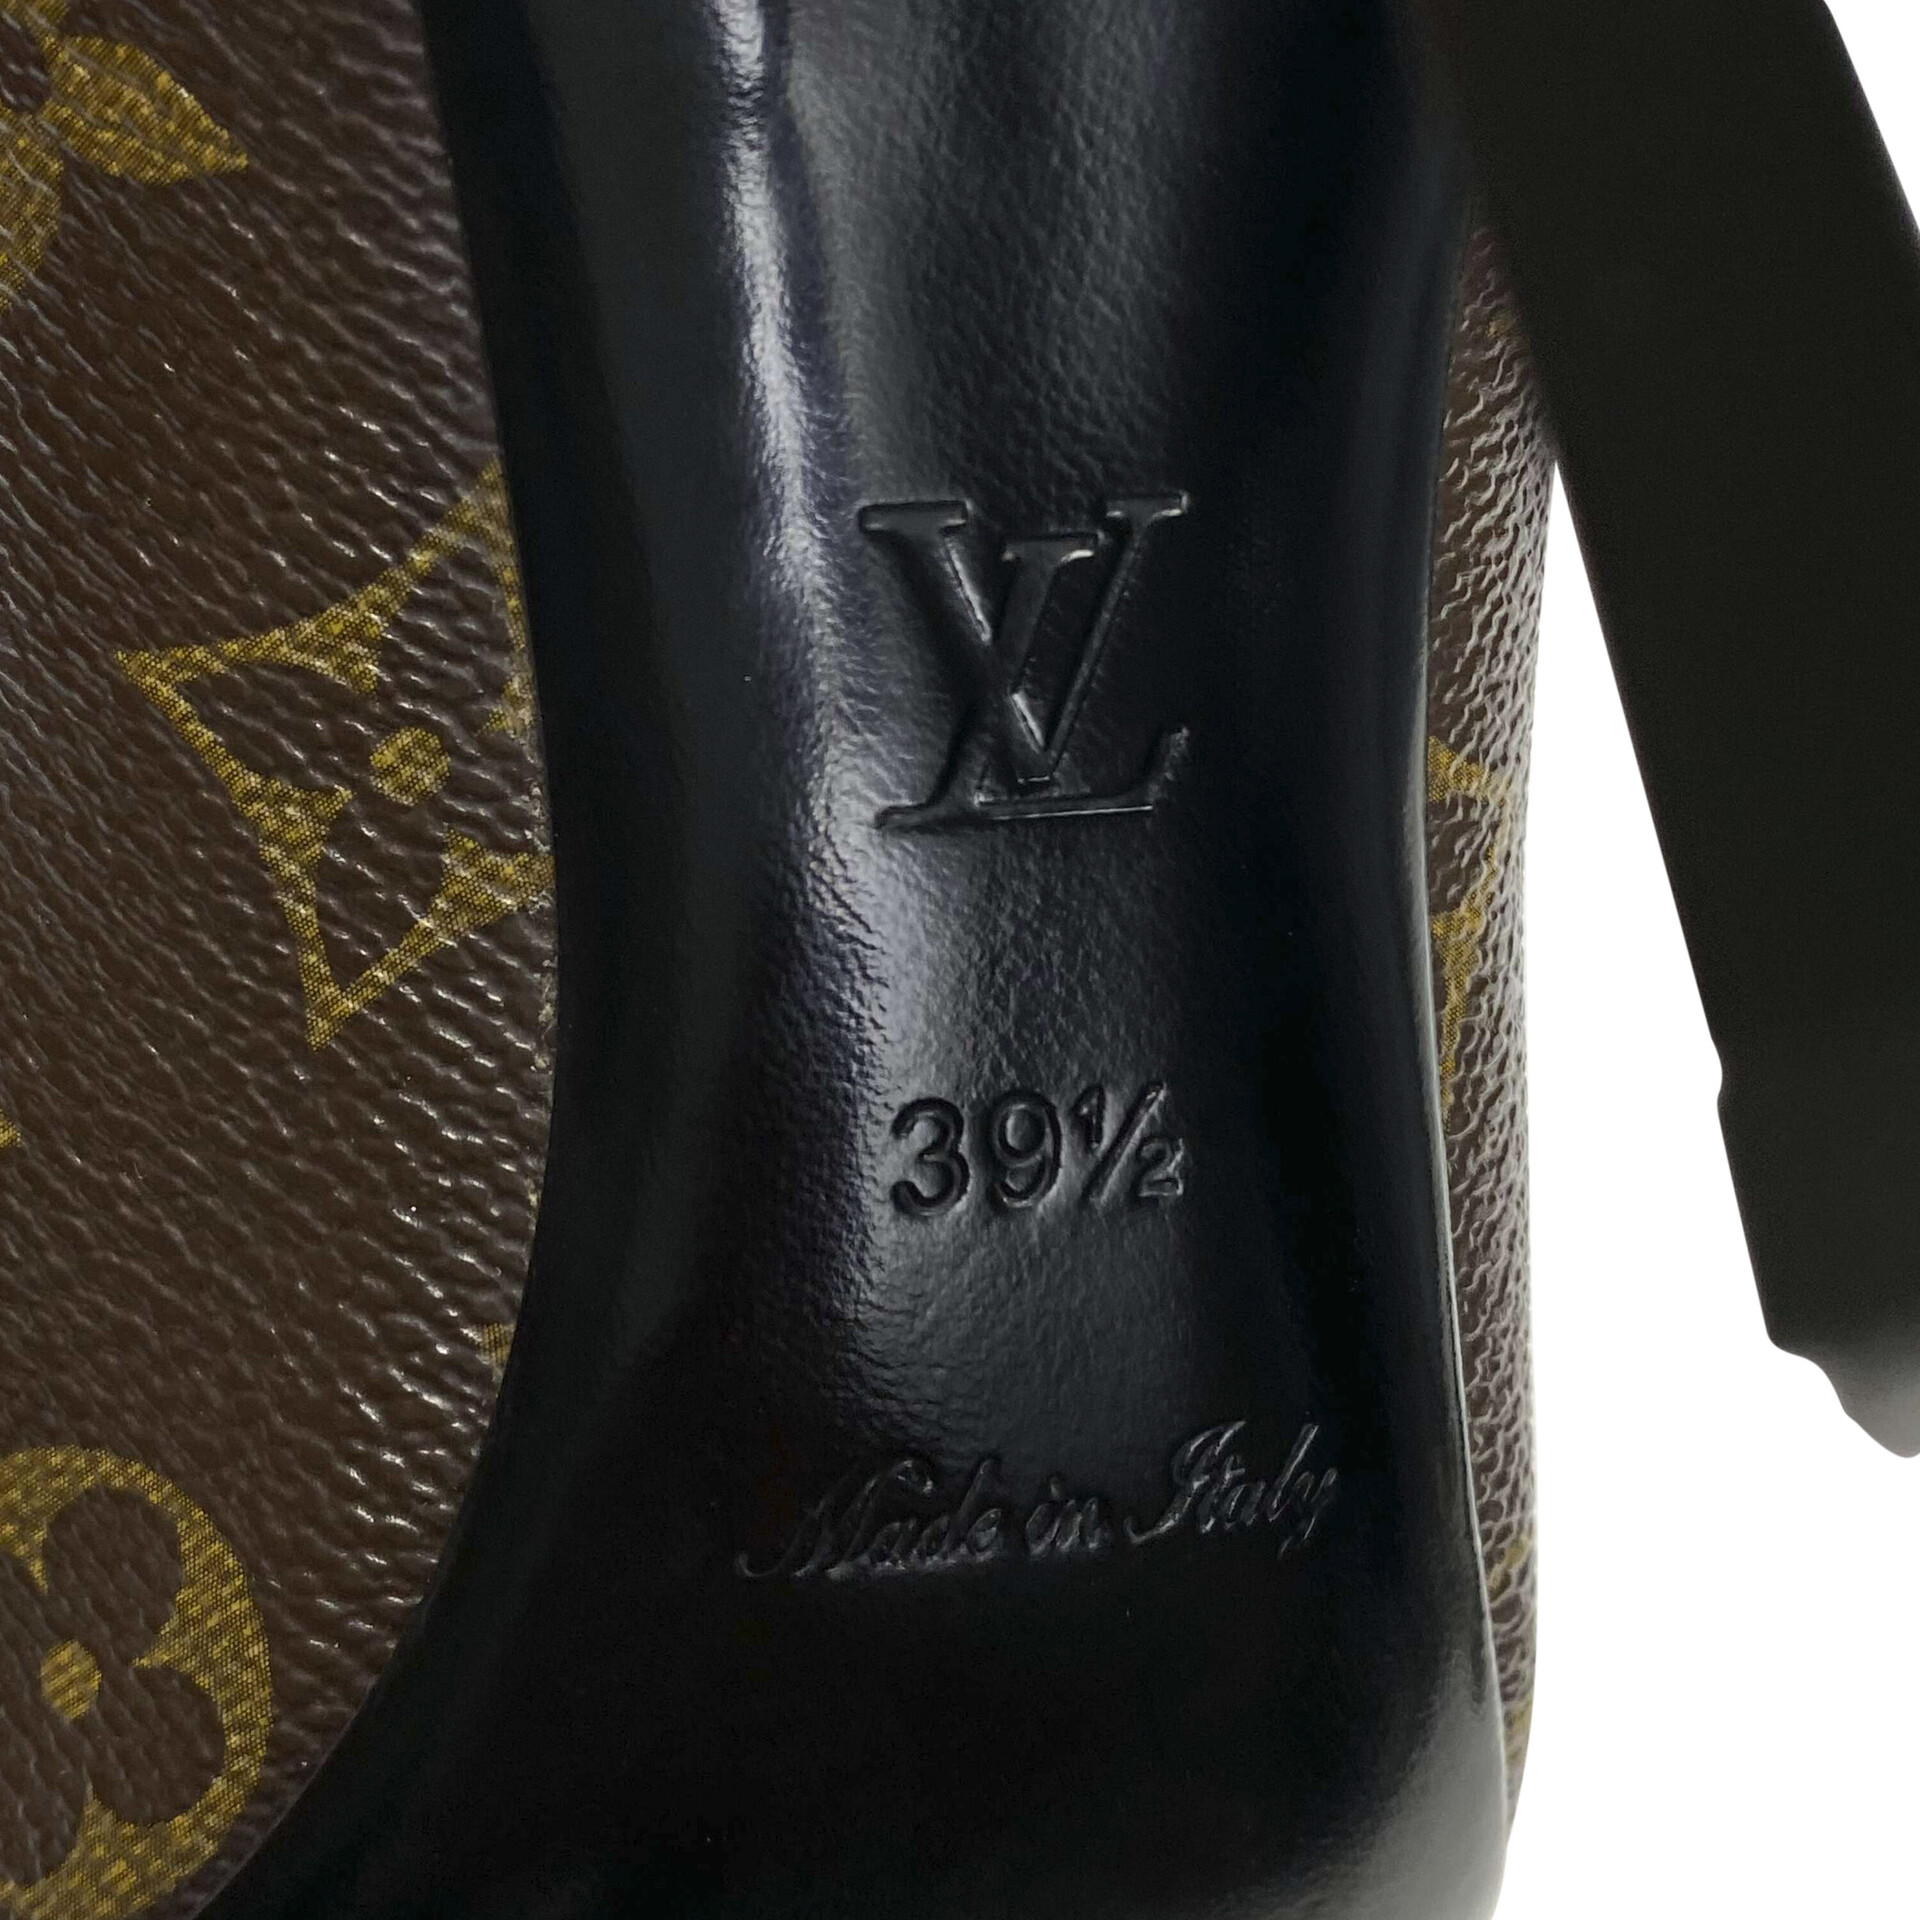 Scarpin Louis Vuitton Monograma